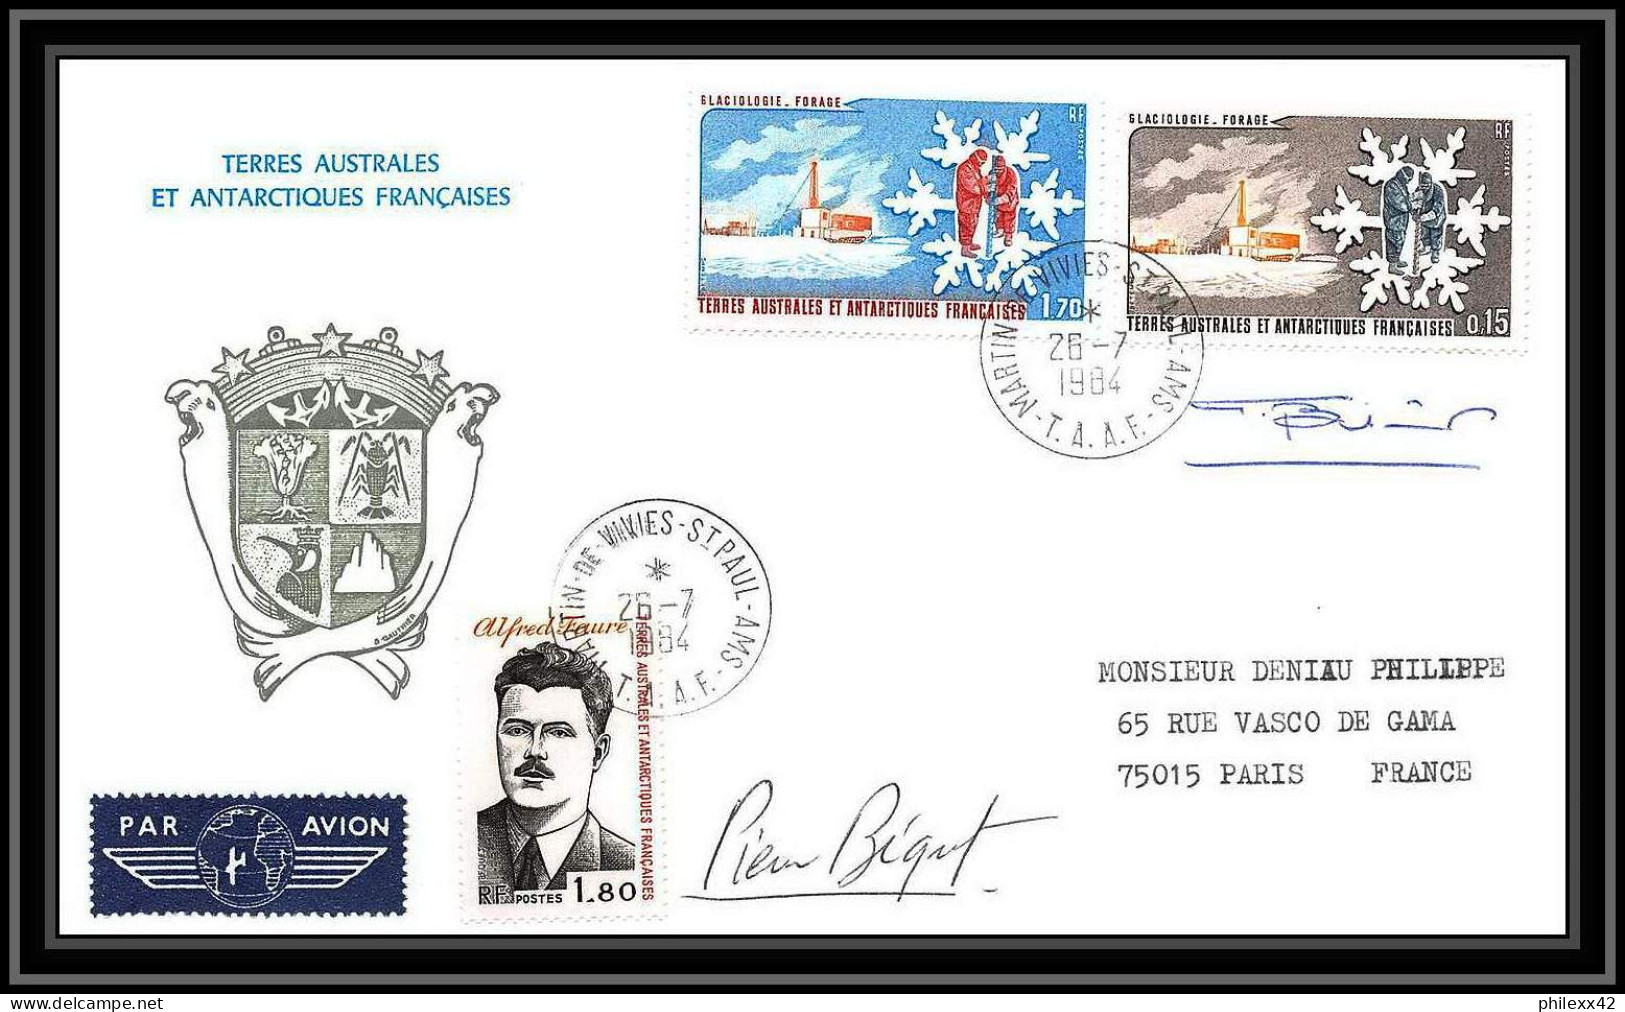 1178 lot 4 Lettres cad différents Taaf terres australes Antarctic covers Signé signed BEQUET 1984 betemp recommandé